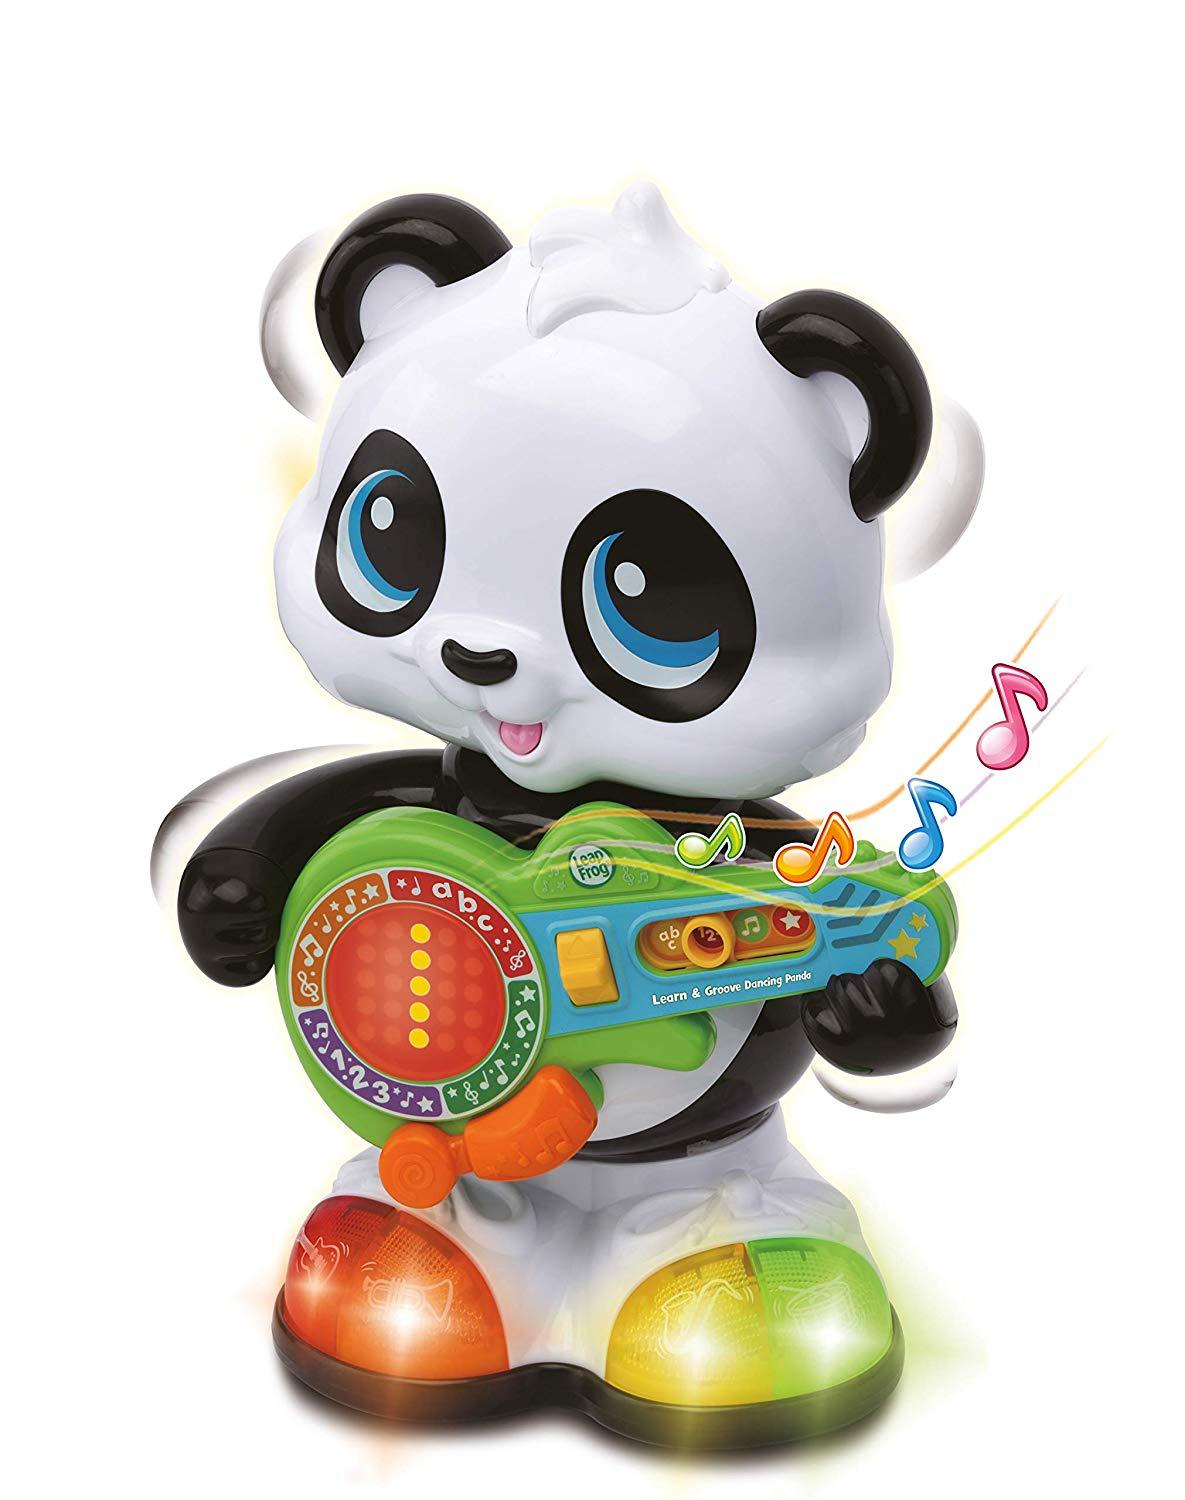 Learn And Groove Dancing Panda